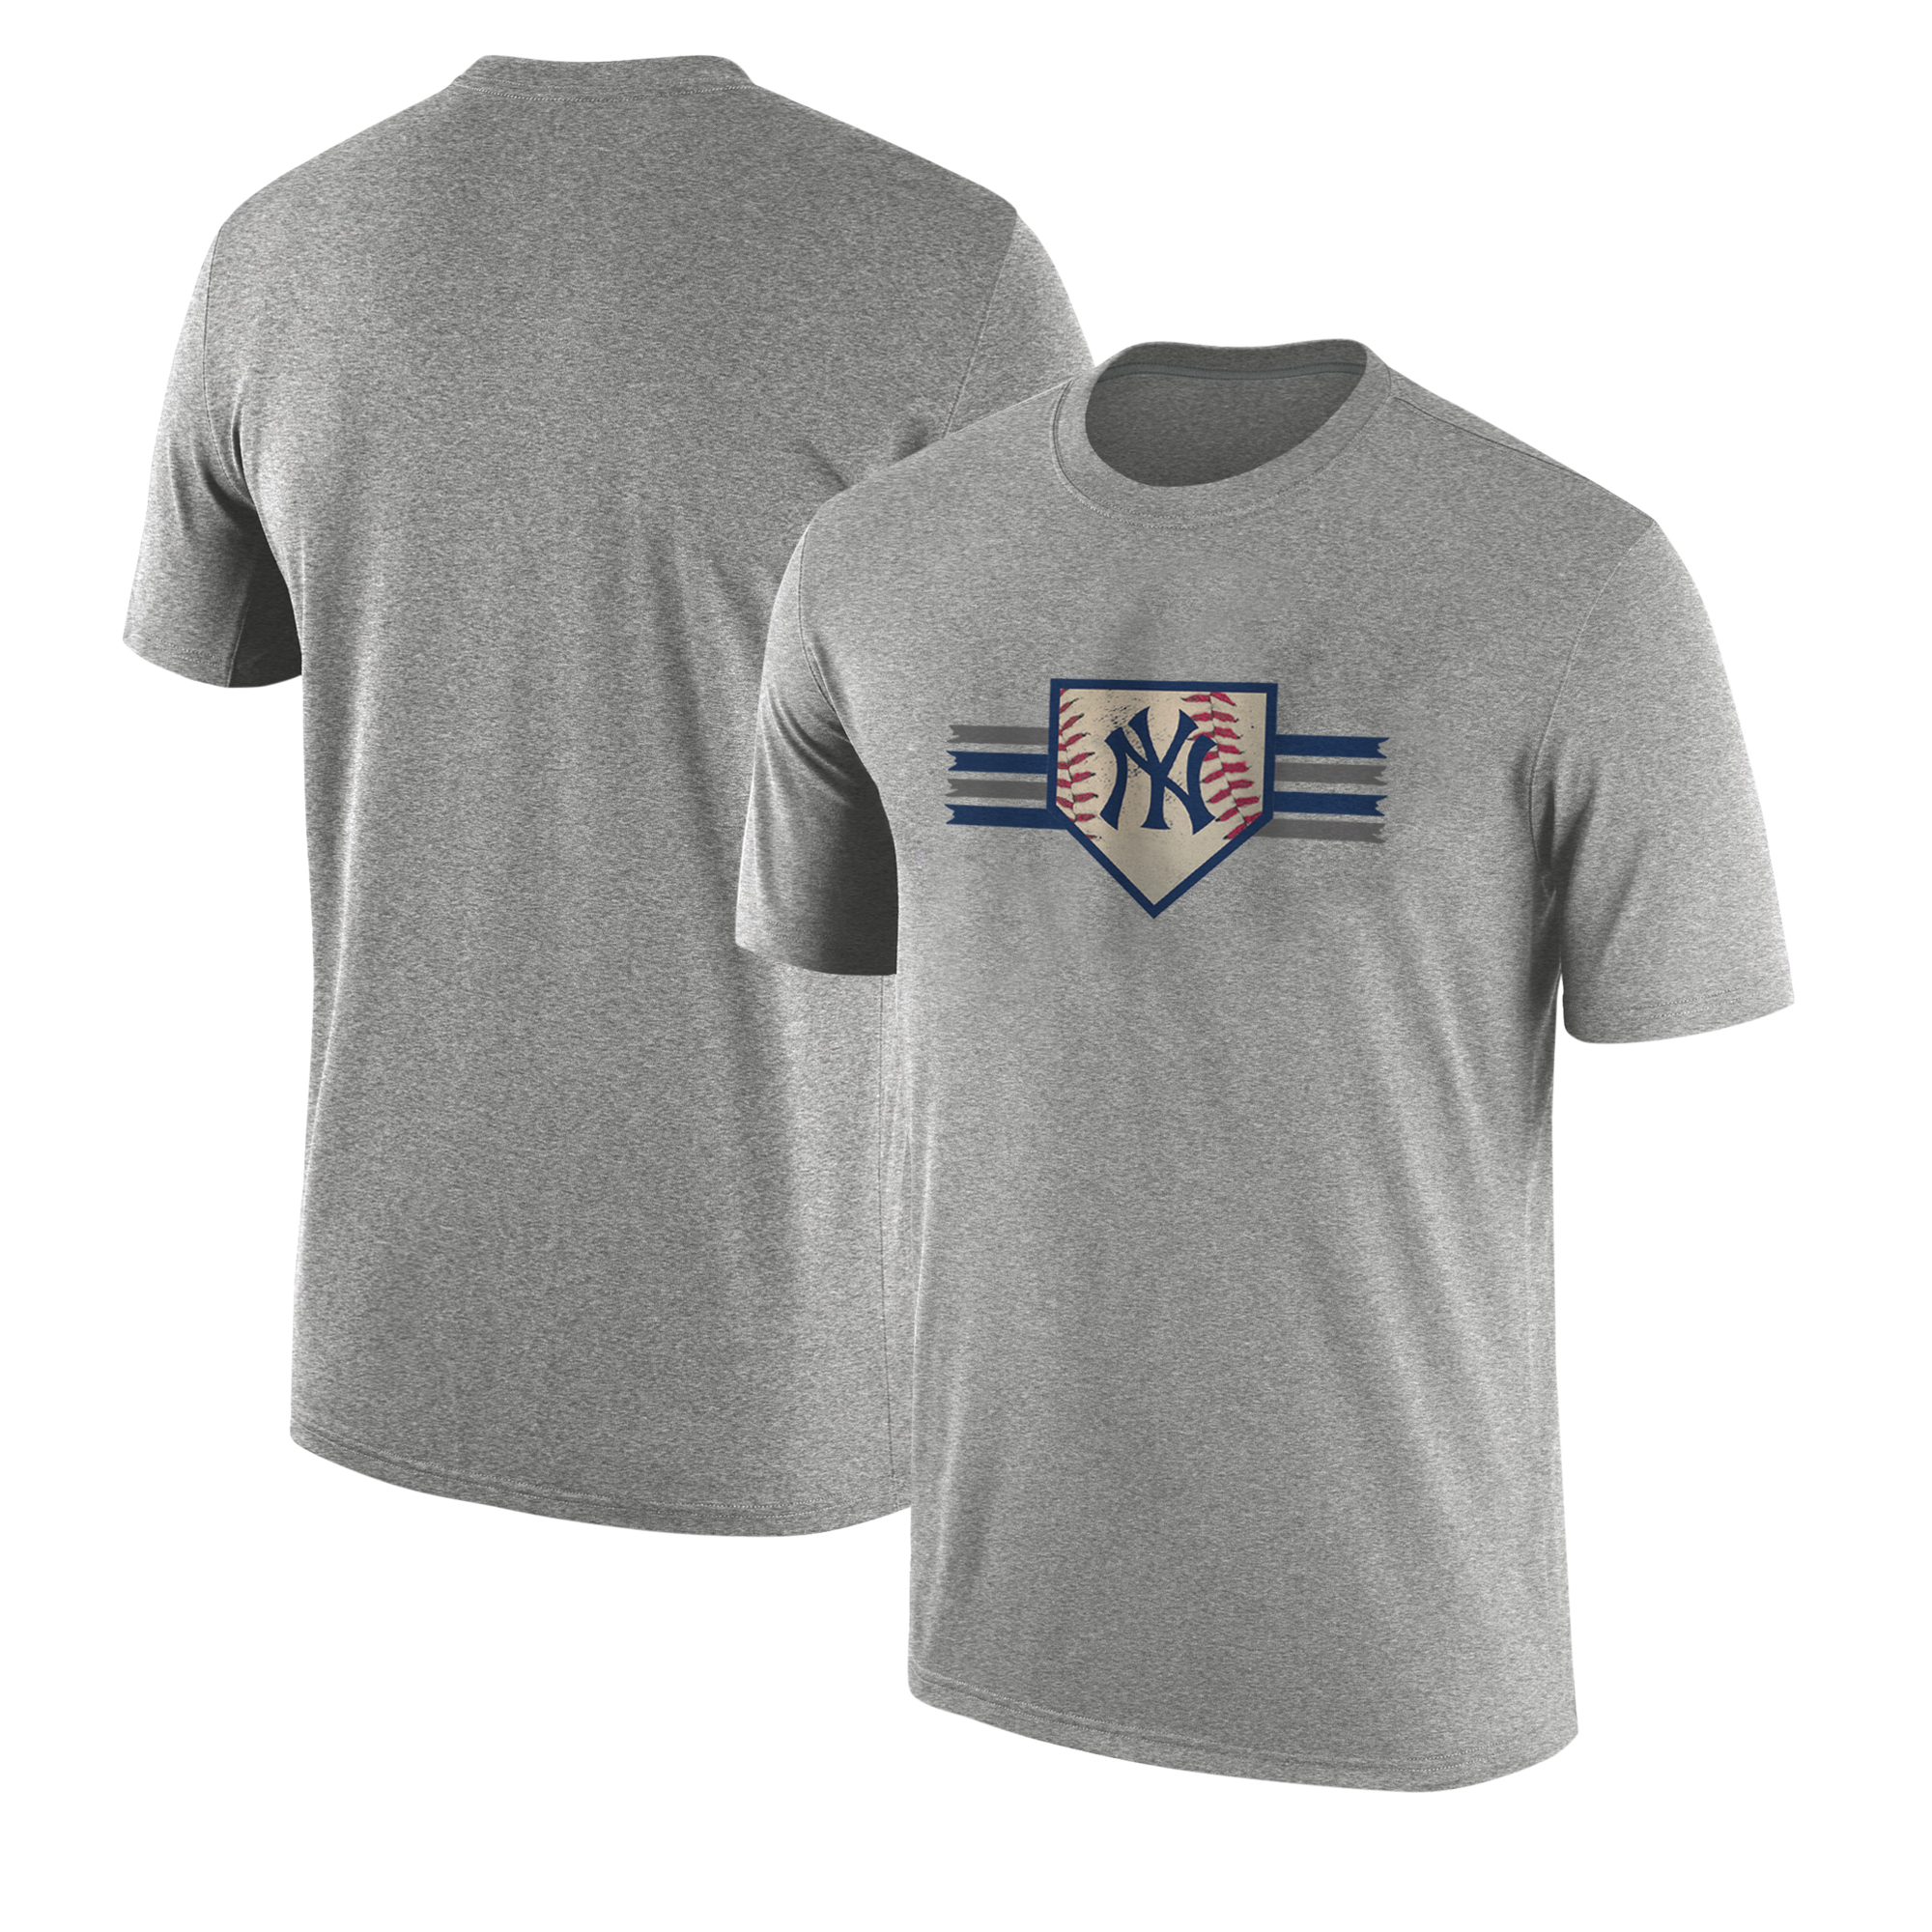 New York Yankees Tshirt (TSH-GRY-838-YANKEES)